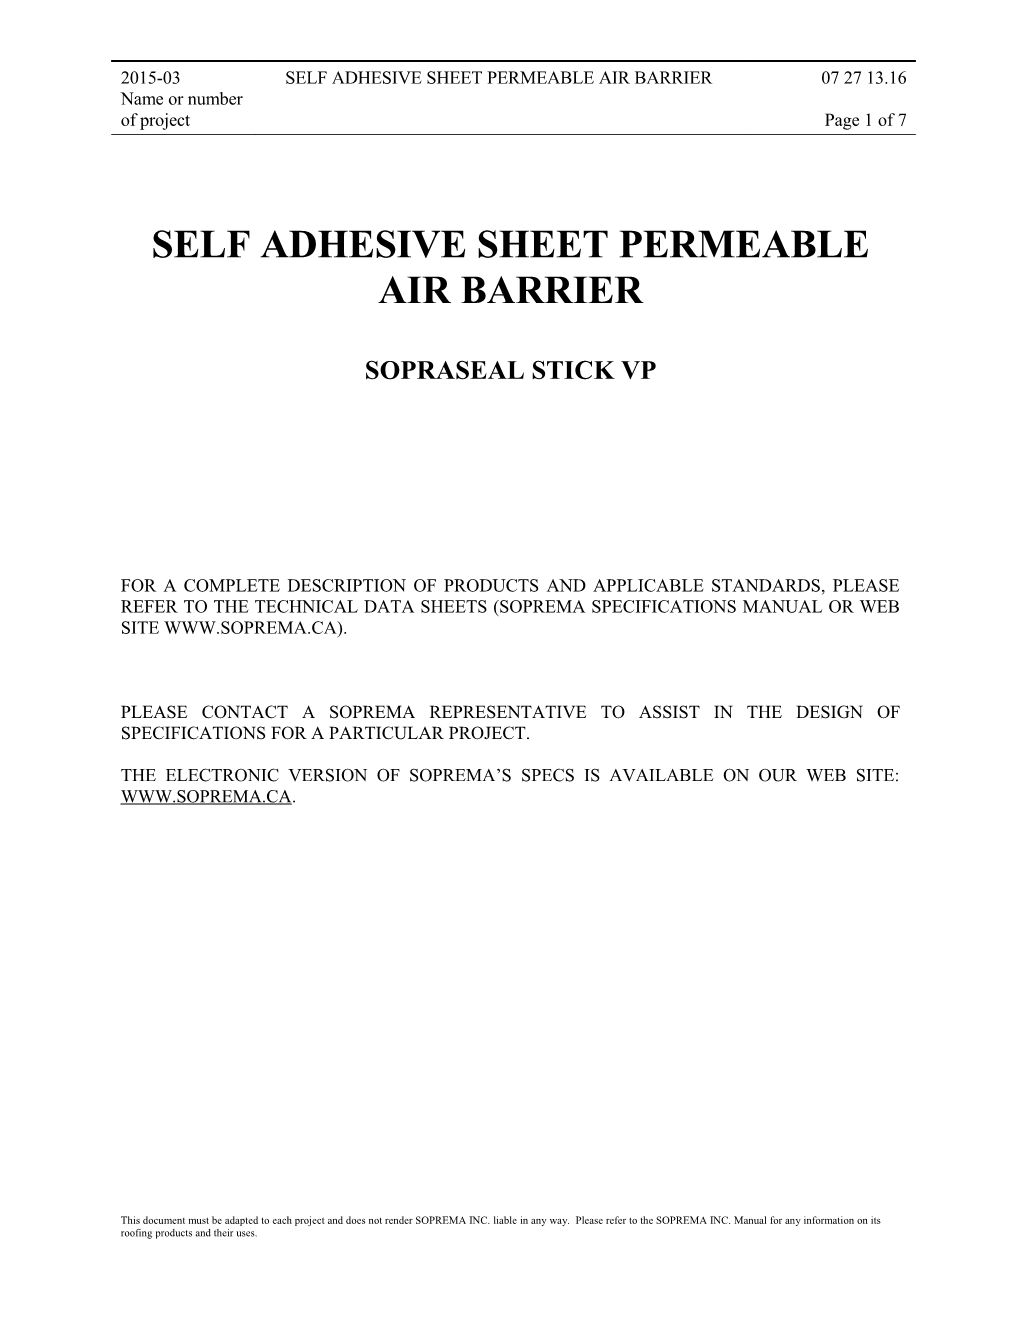 Self Adhesive Sheet Permeable Air Barrier